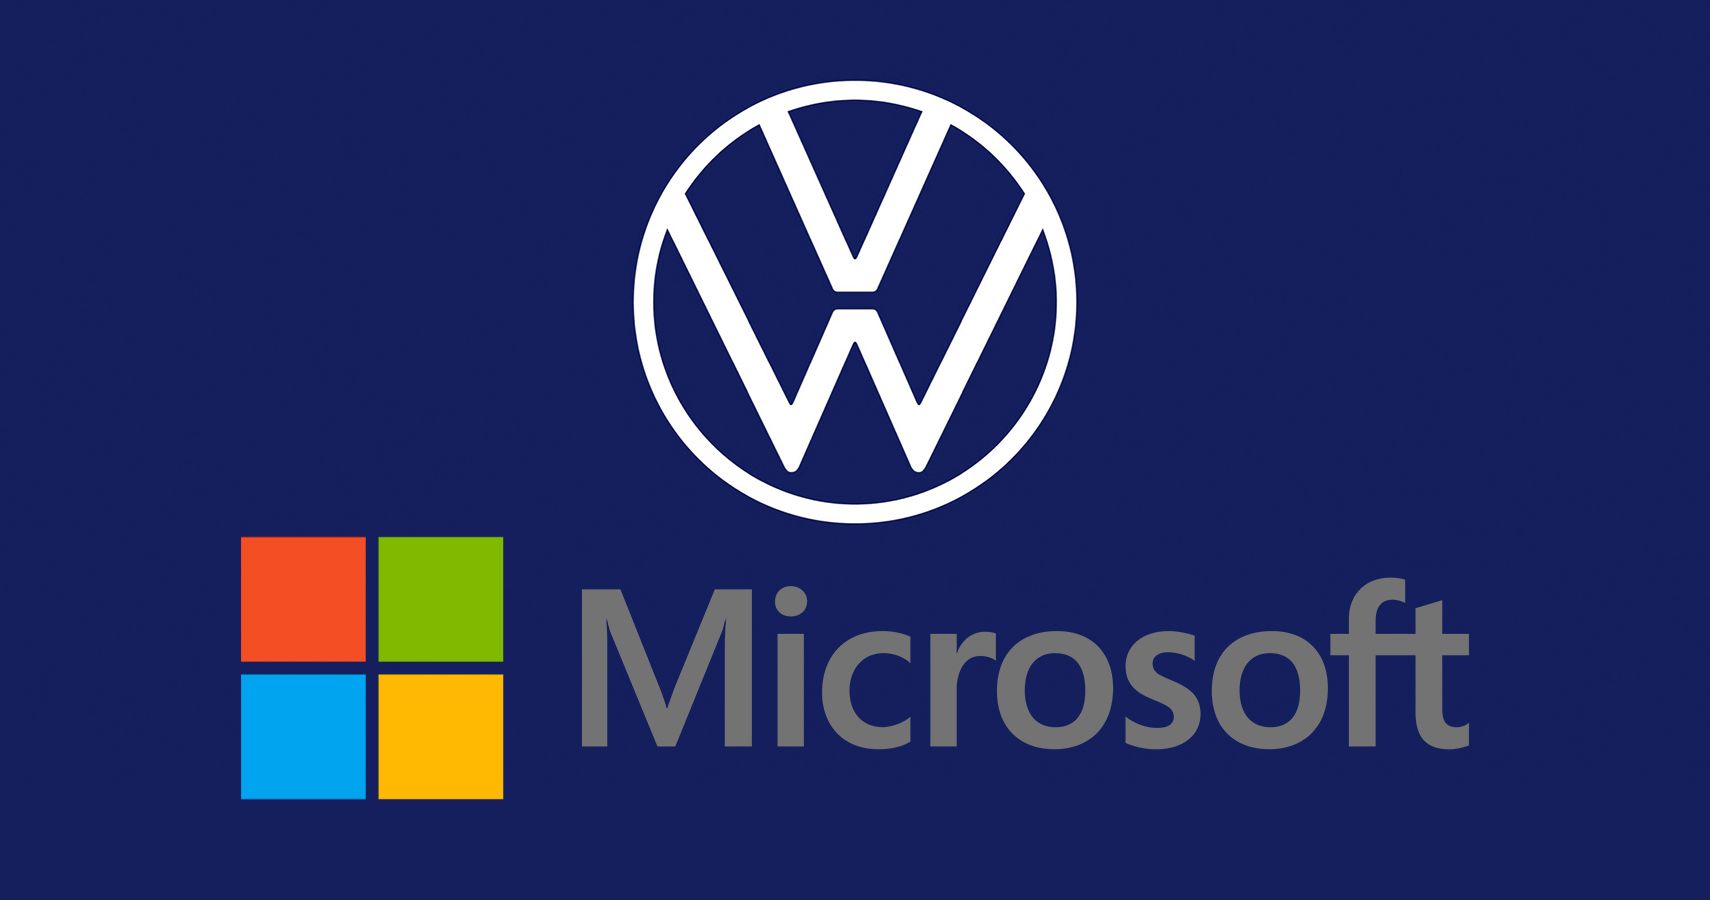 VW and Microsoft logos